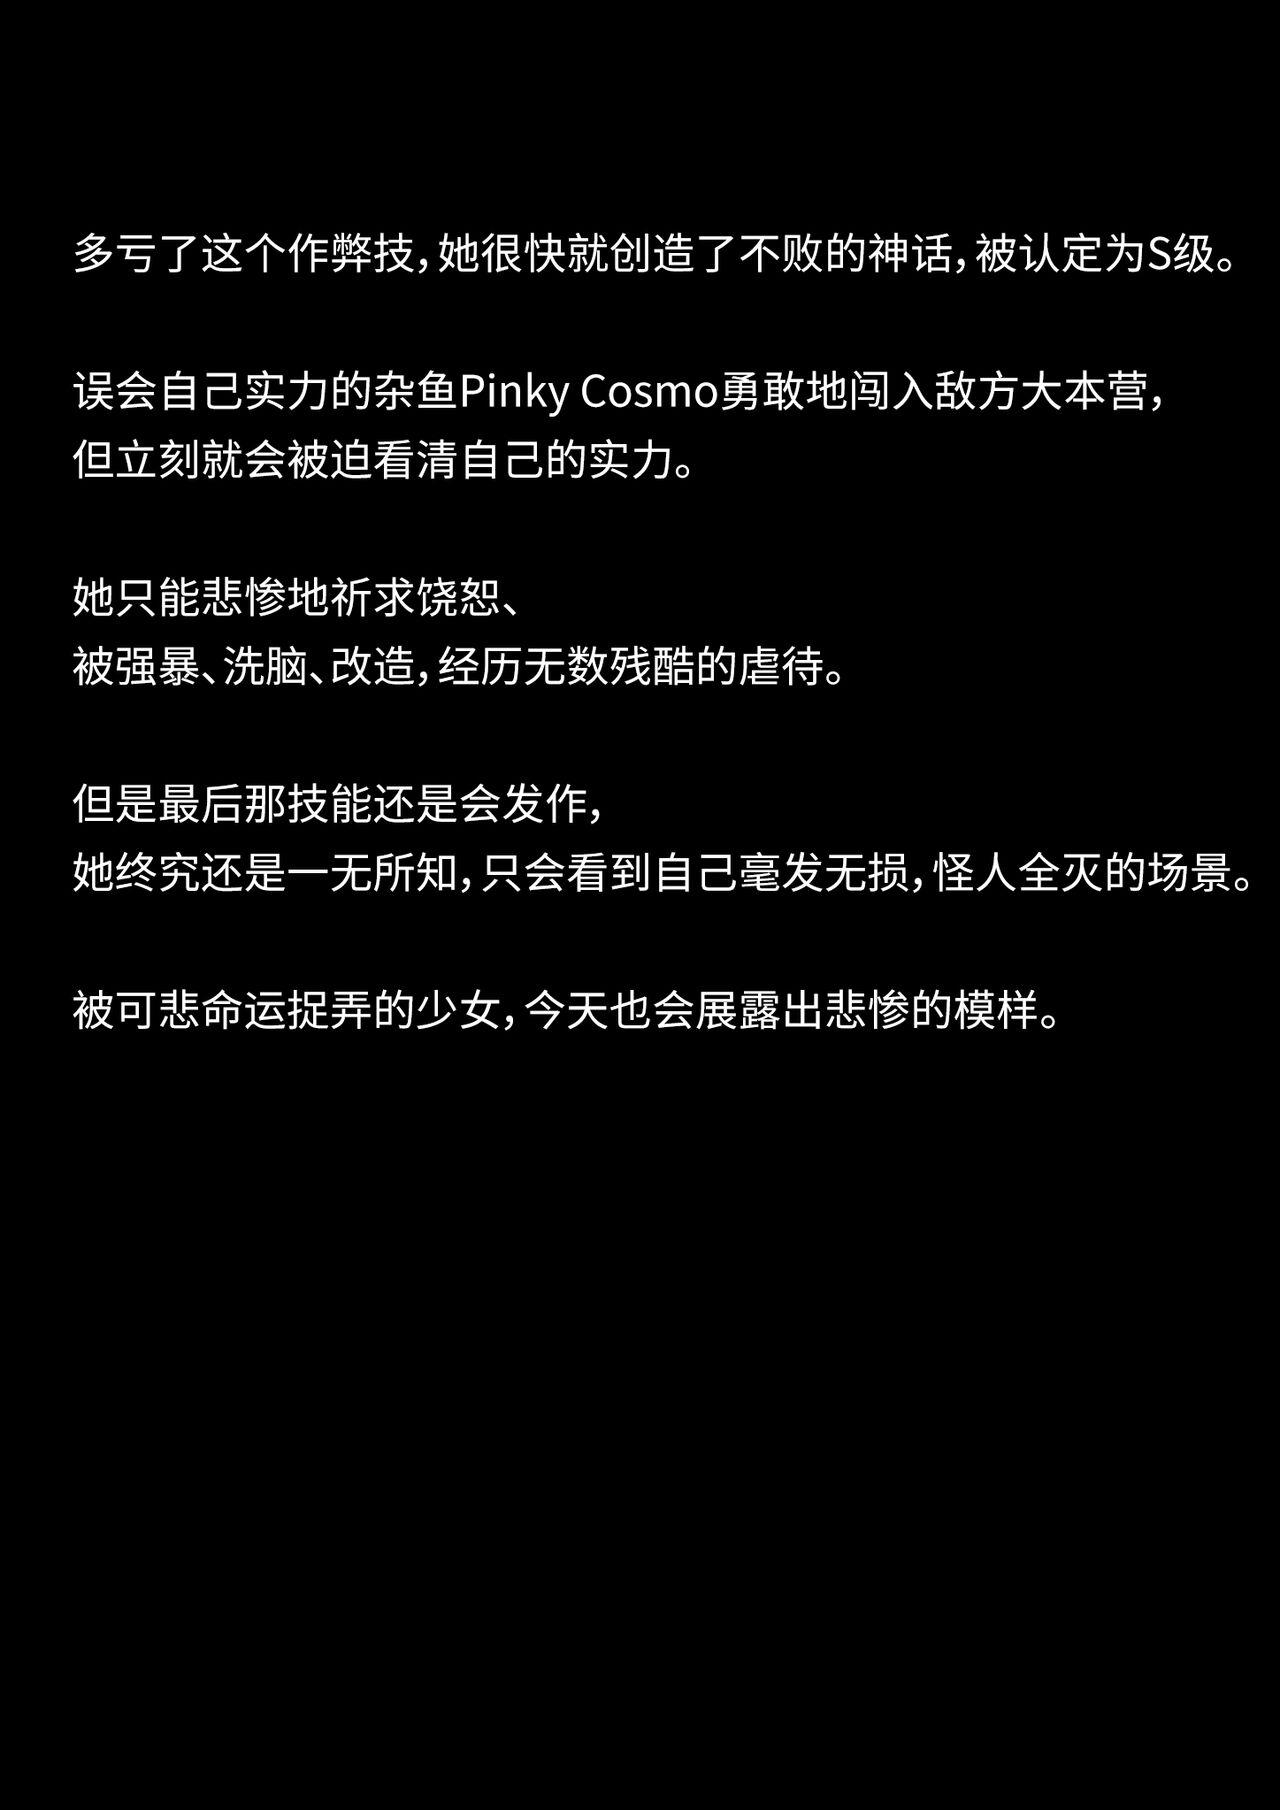 Pinky cosmo的信息 4